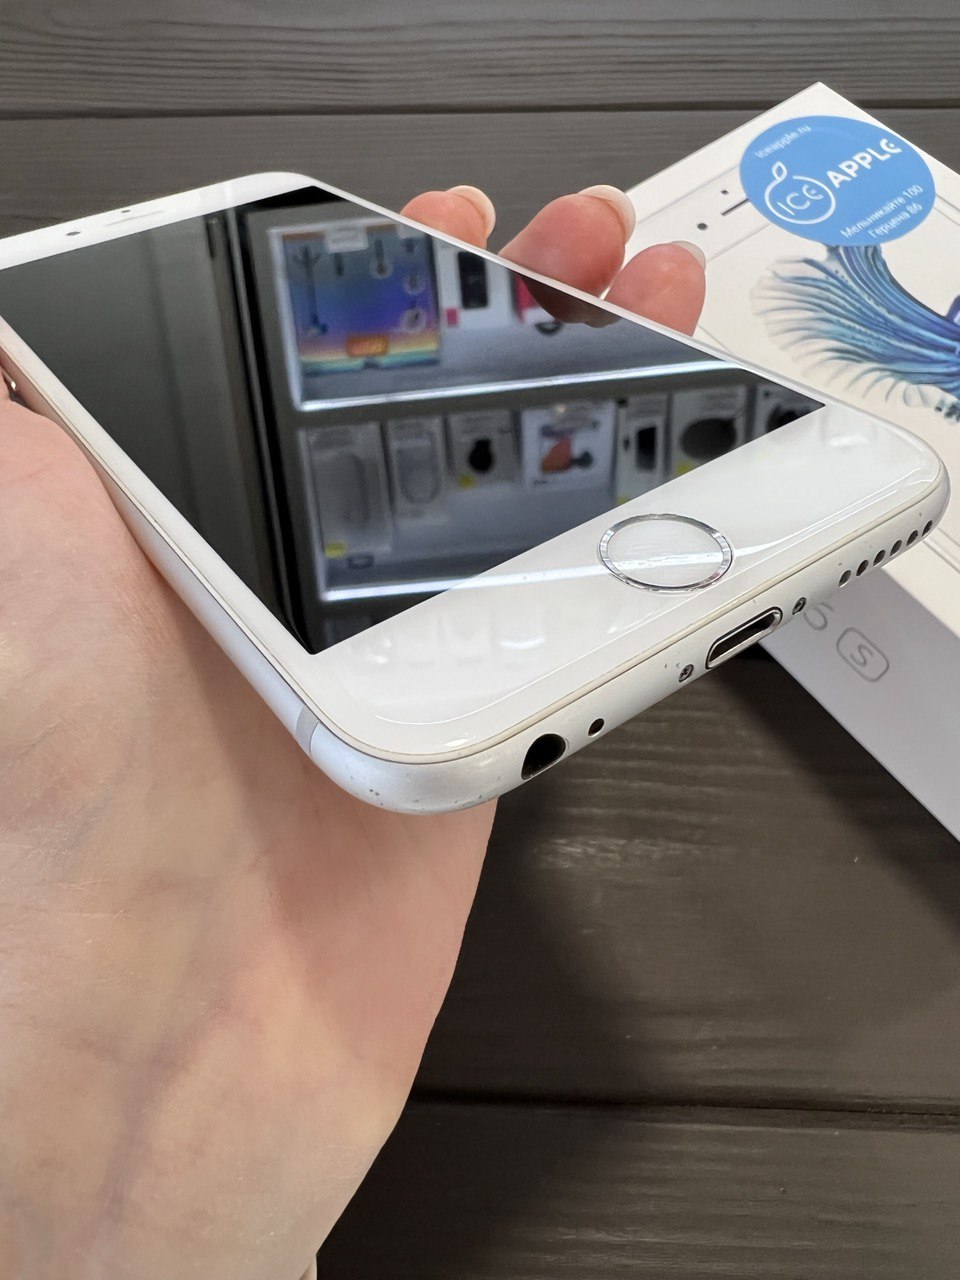 Apple iPhone 6s 16Gb Silver